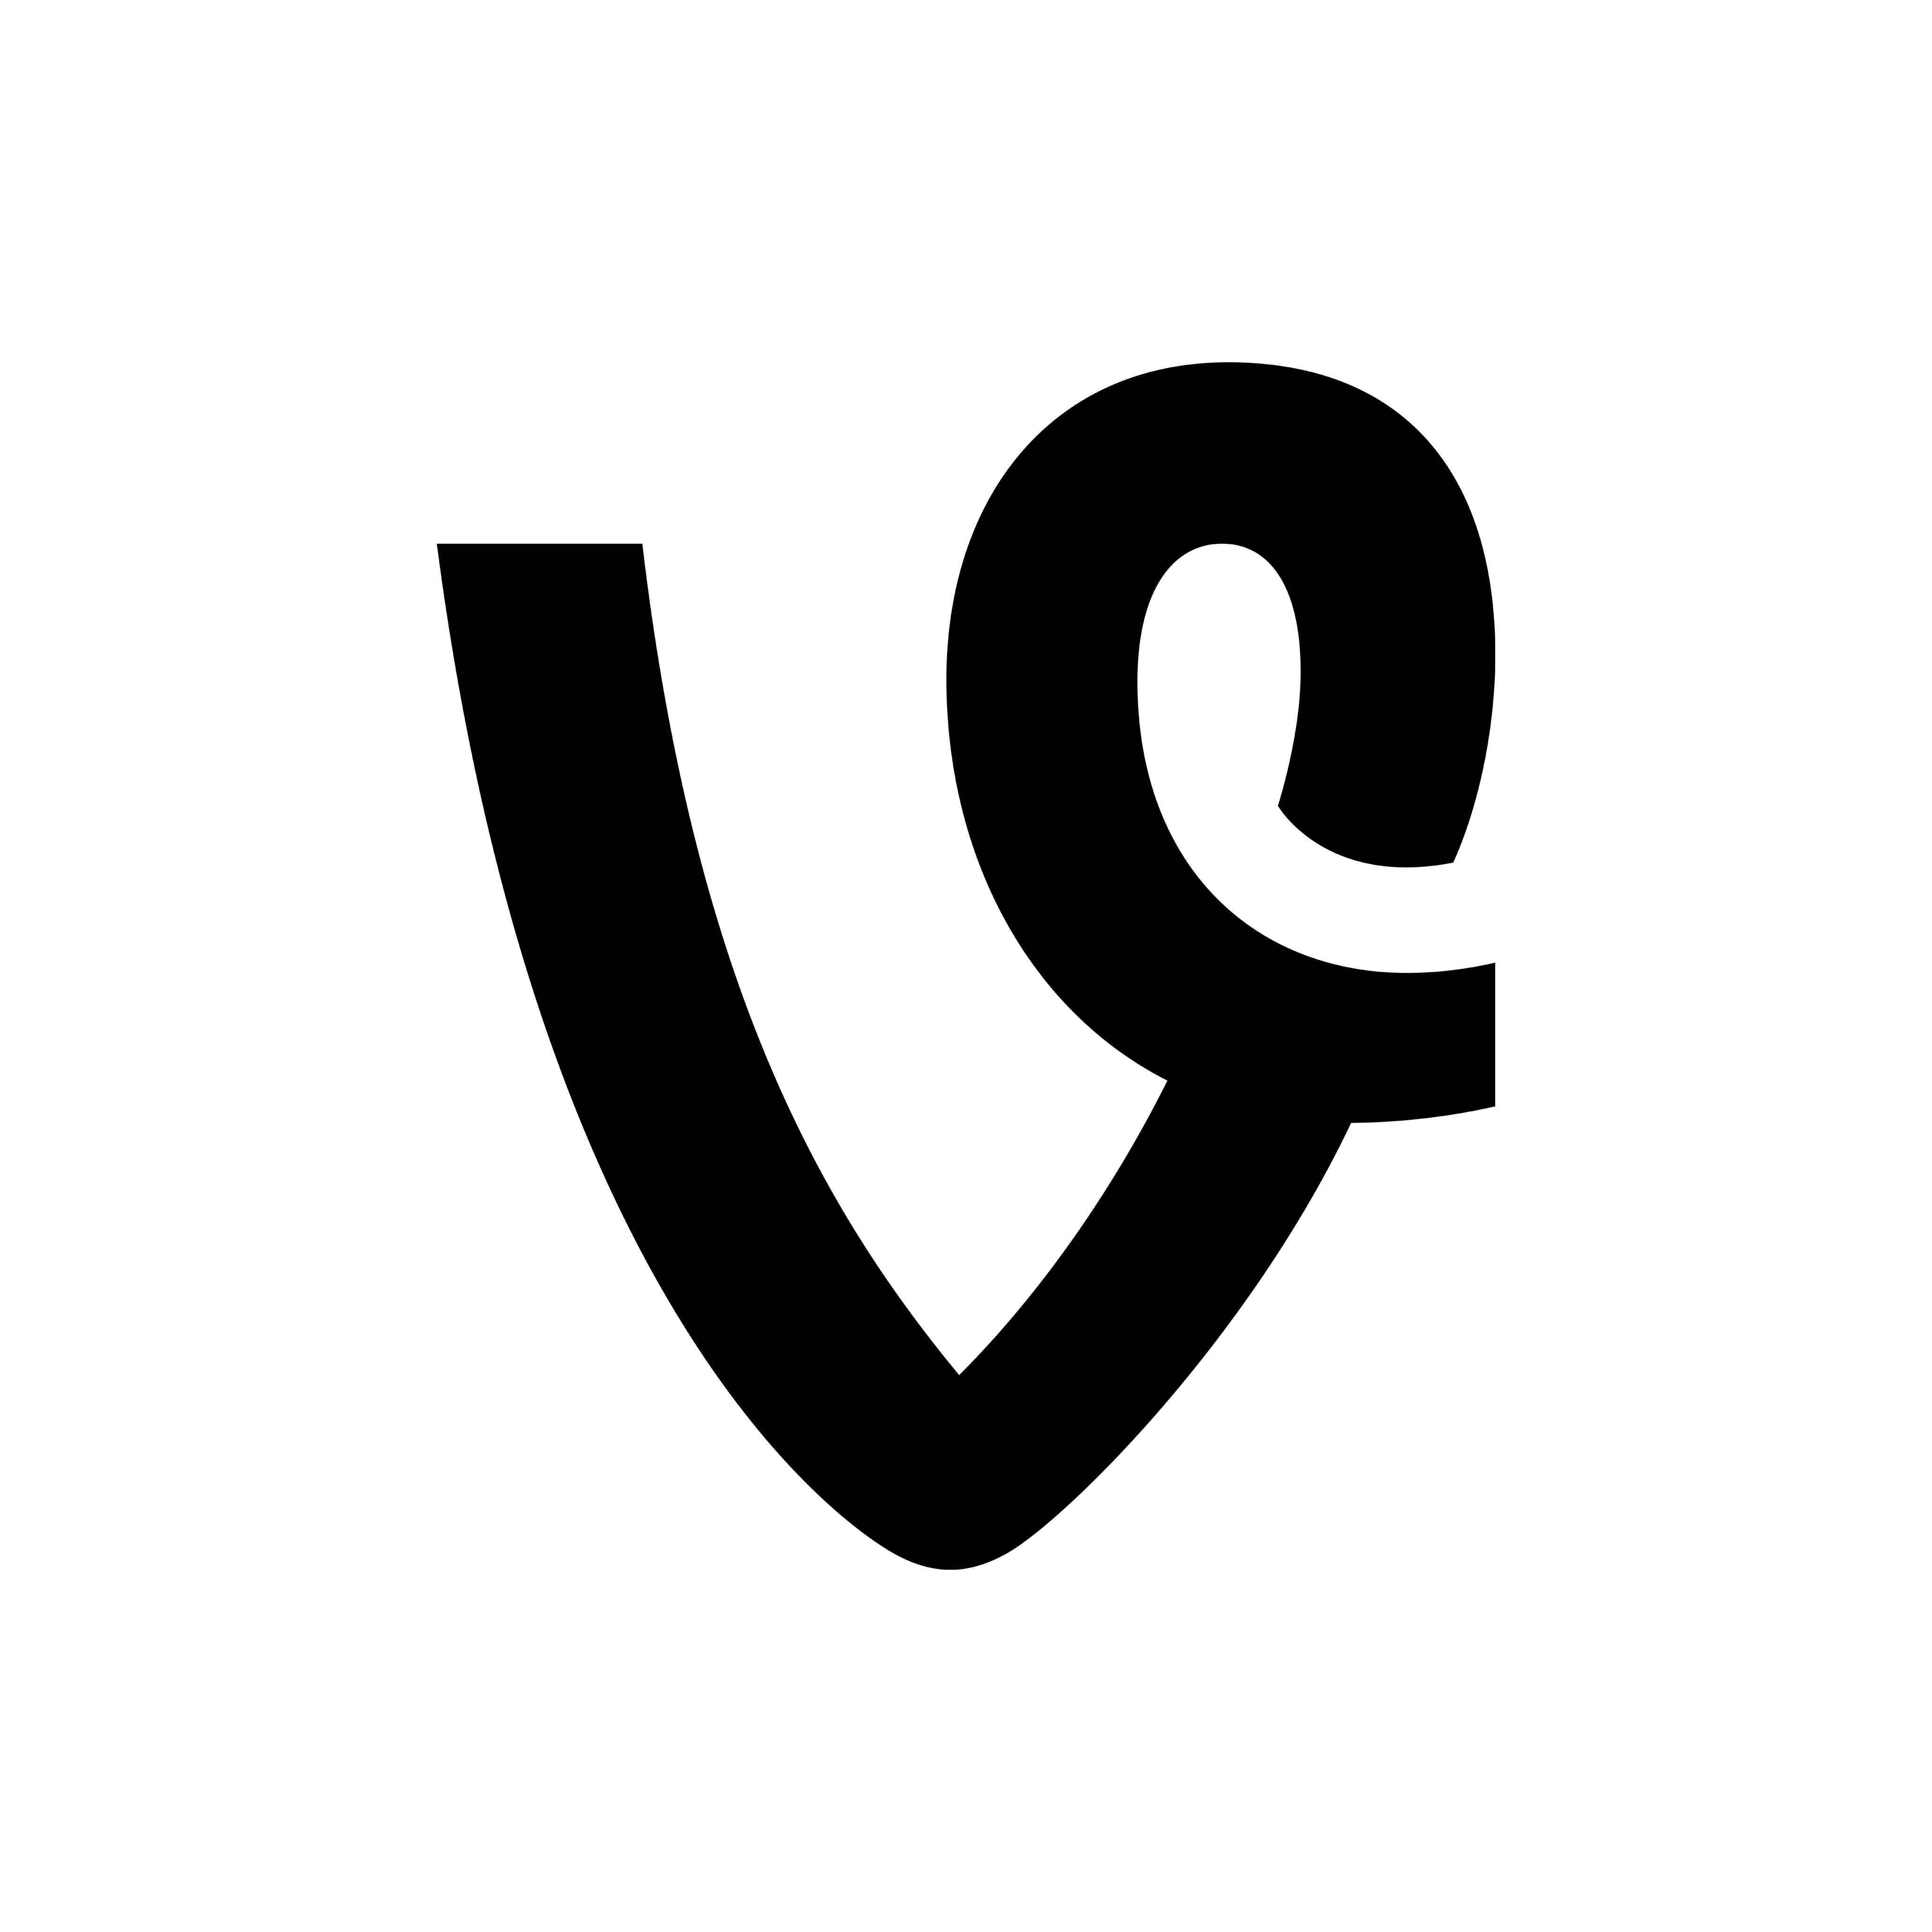 Cool Vine Logo - Vine icon